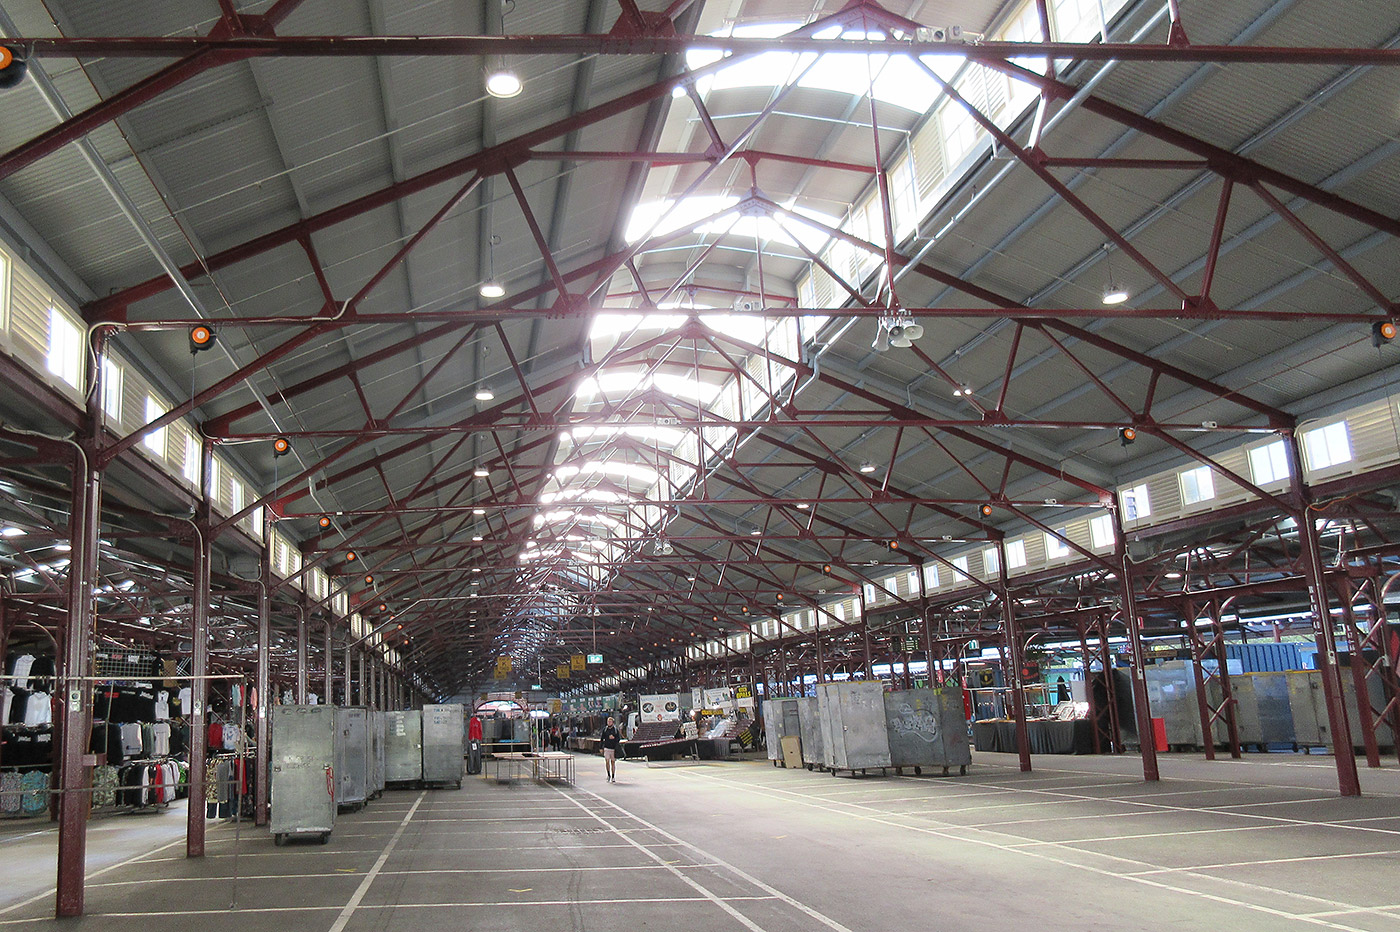 Queen Victoria Market sheds